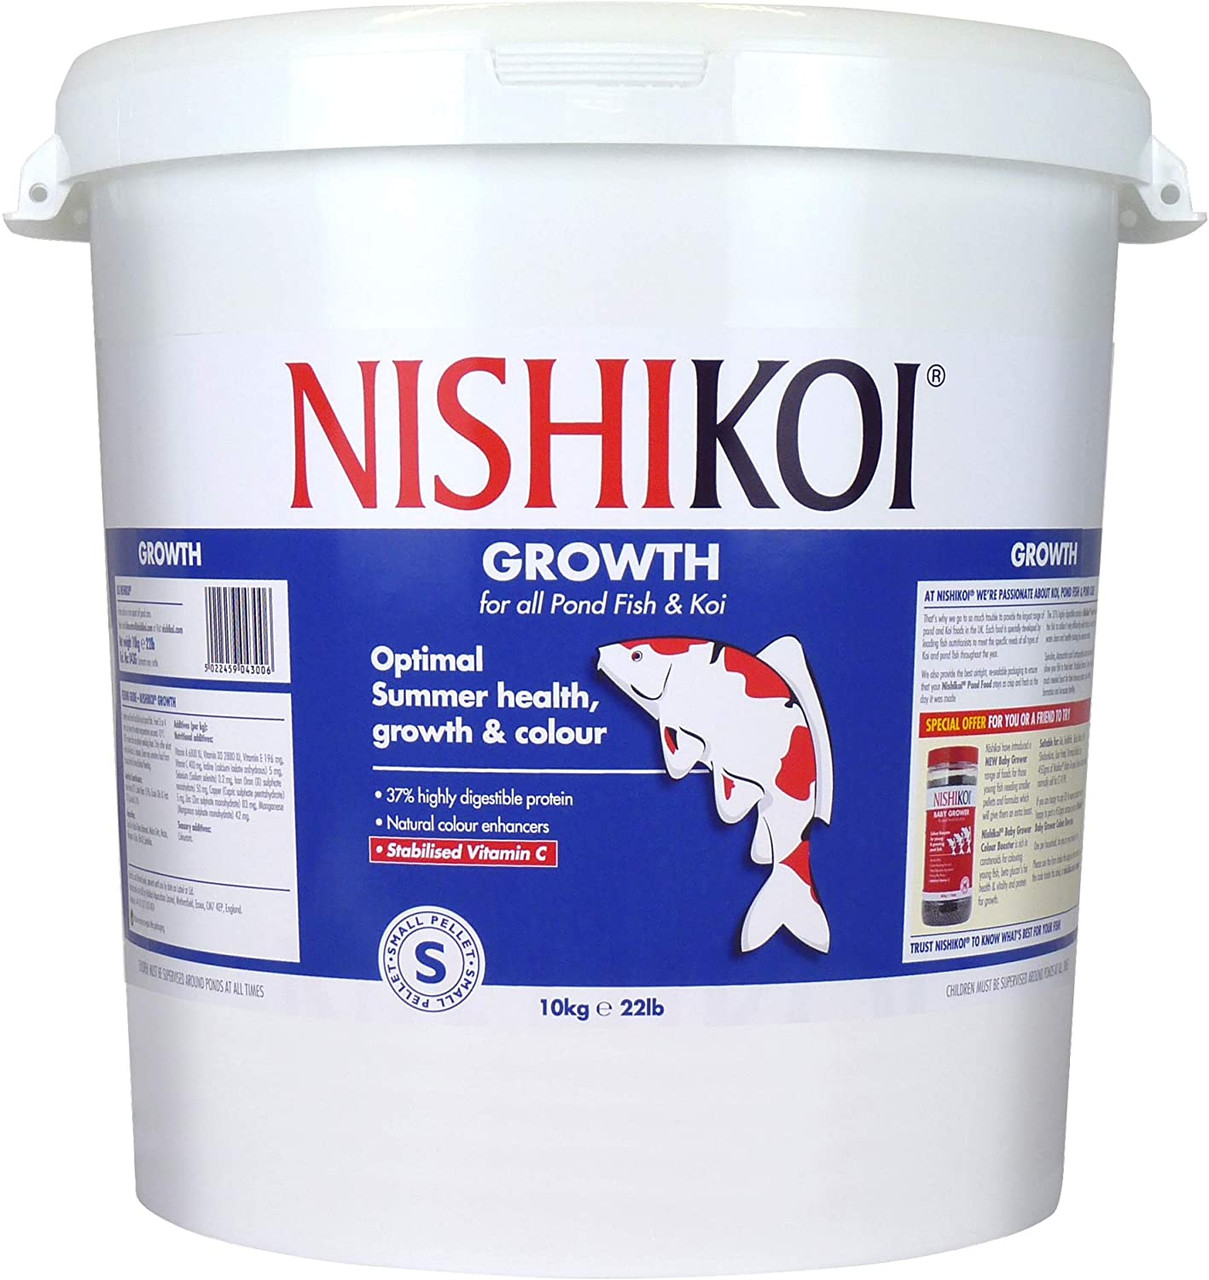 Nishikoi Growth 10Kg Small Pellet - 043G